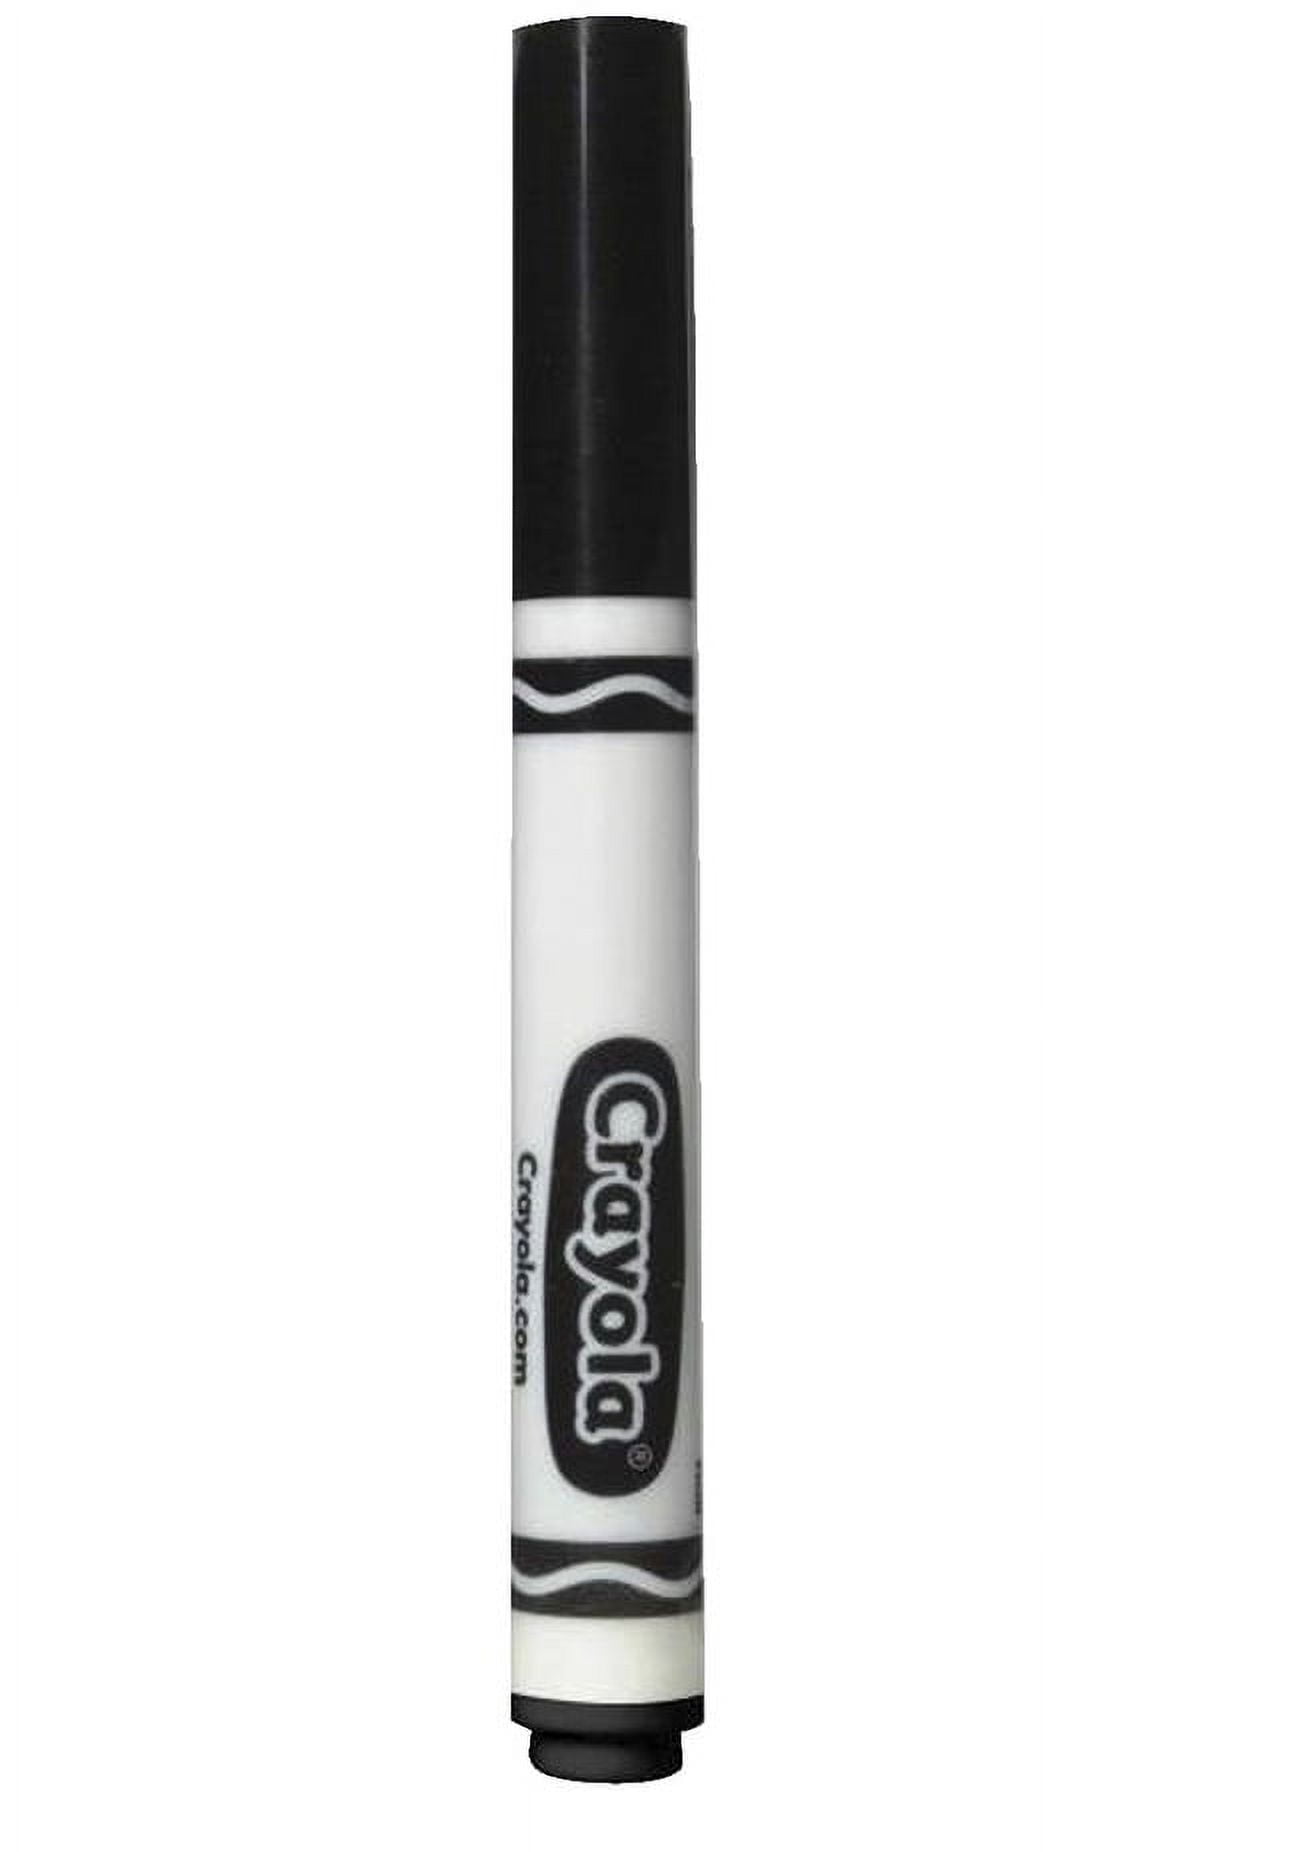 Crayola, Office, Single Color Pack Crayola Markers Black